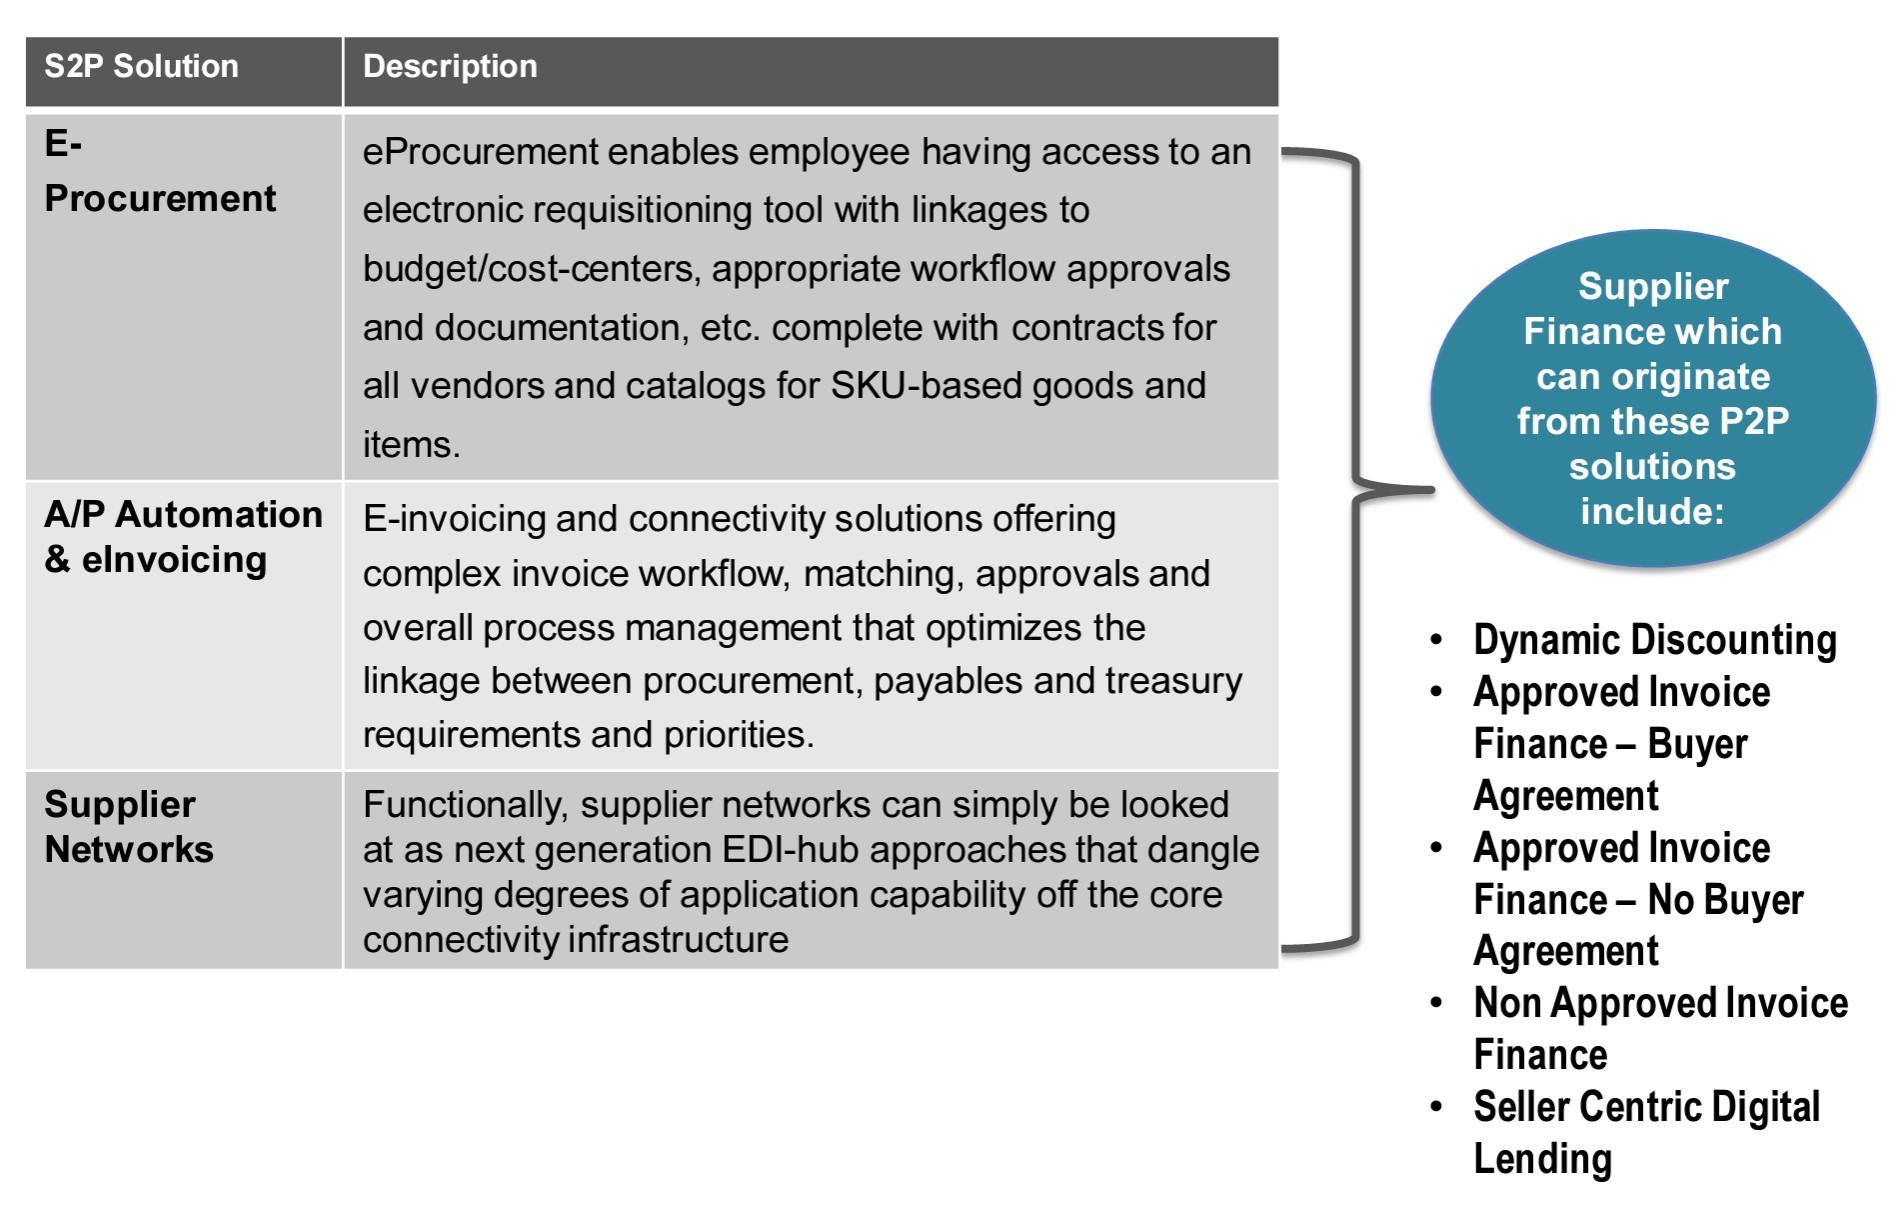 High Level Description of Eprocurement, Einvoicing and Supplier Networks